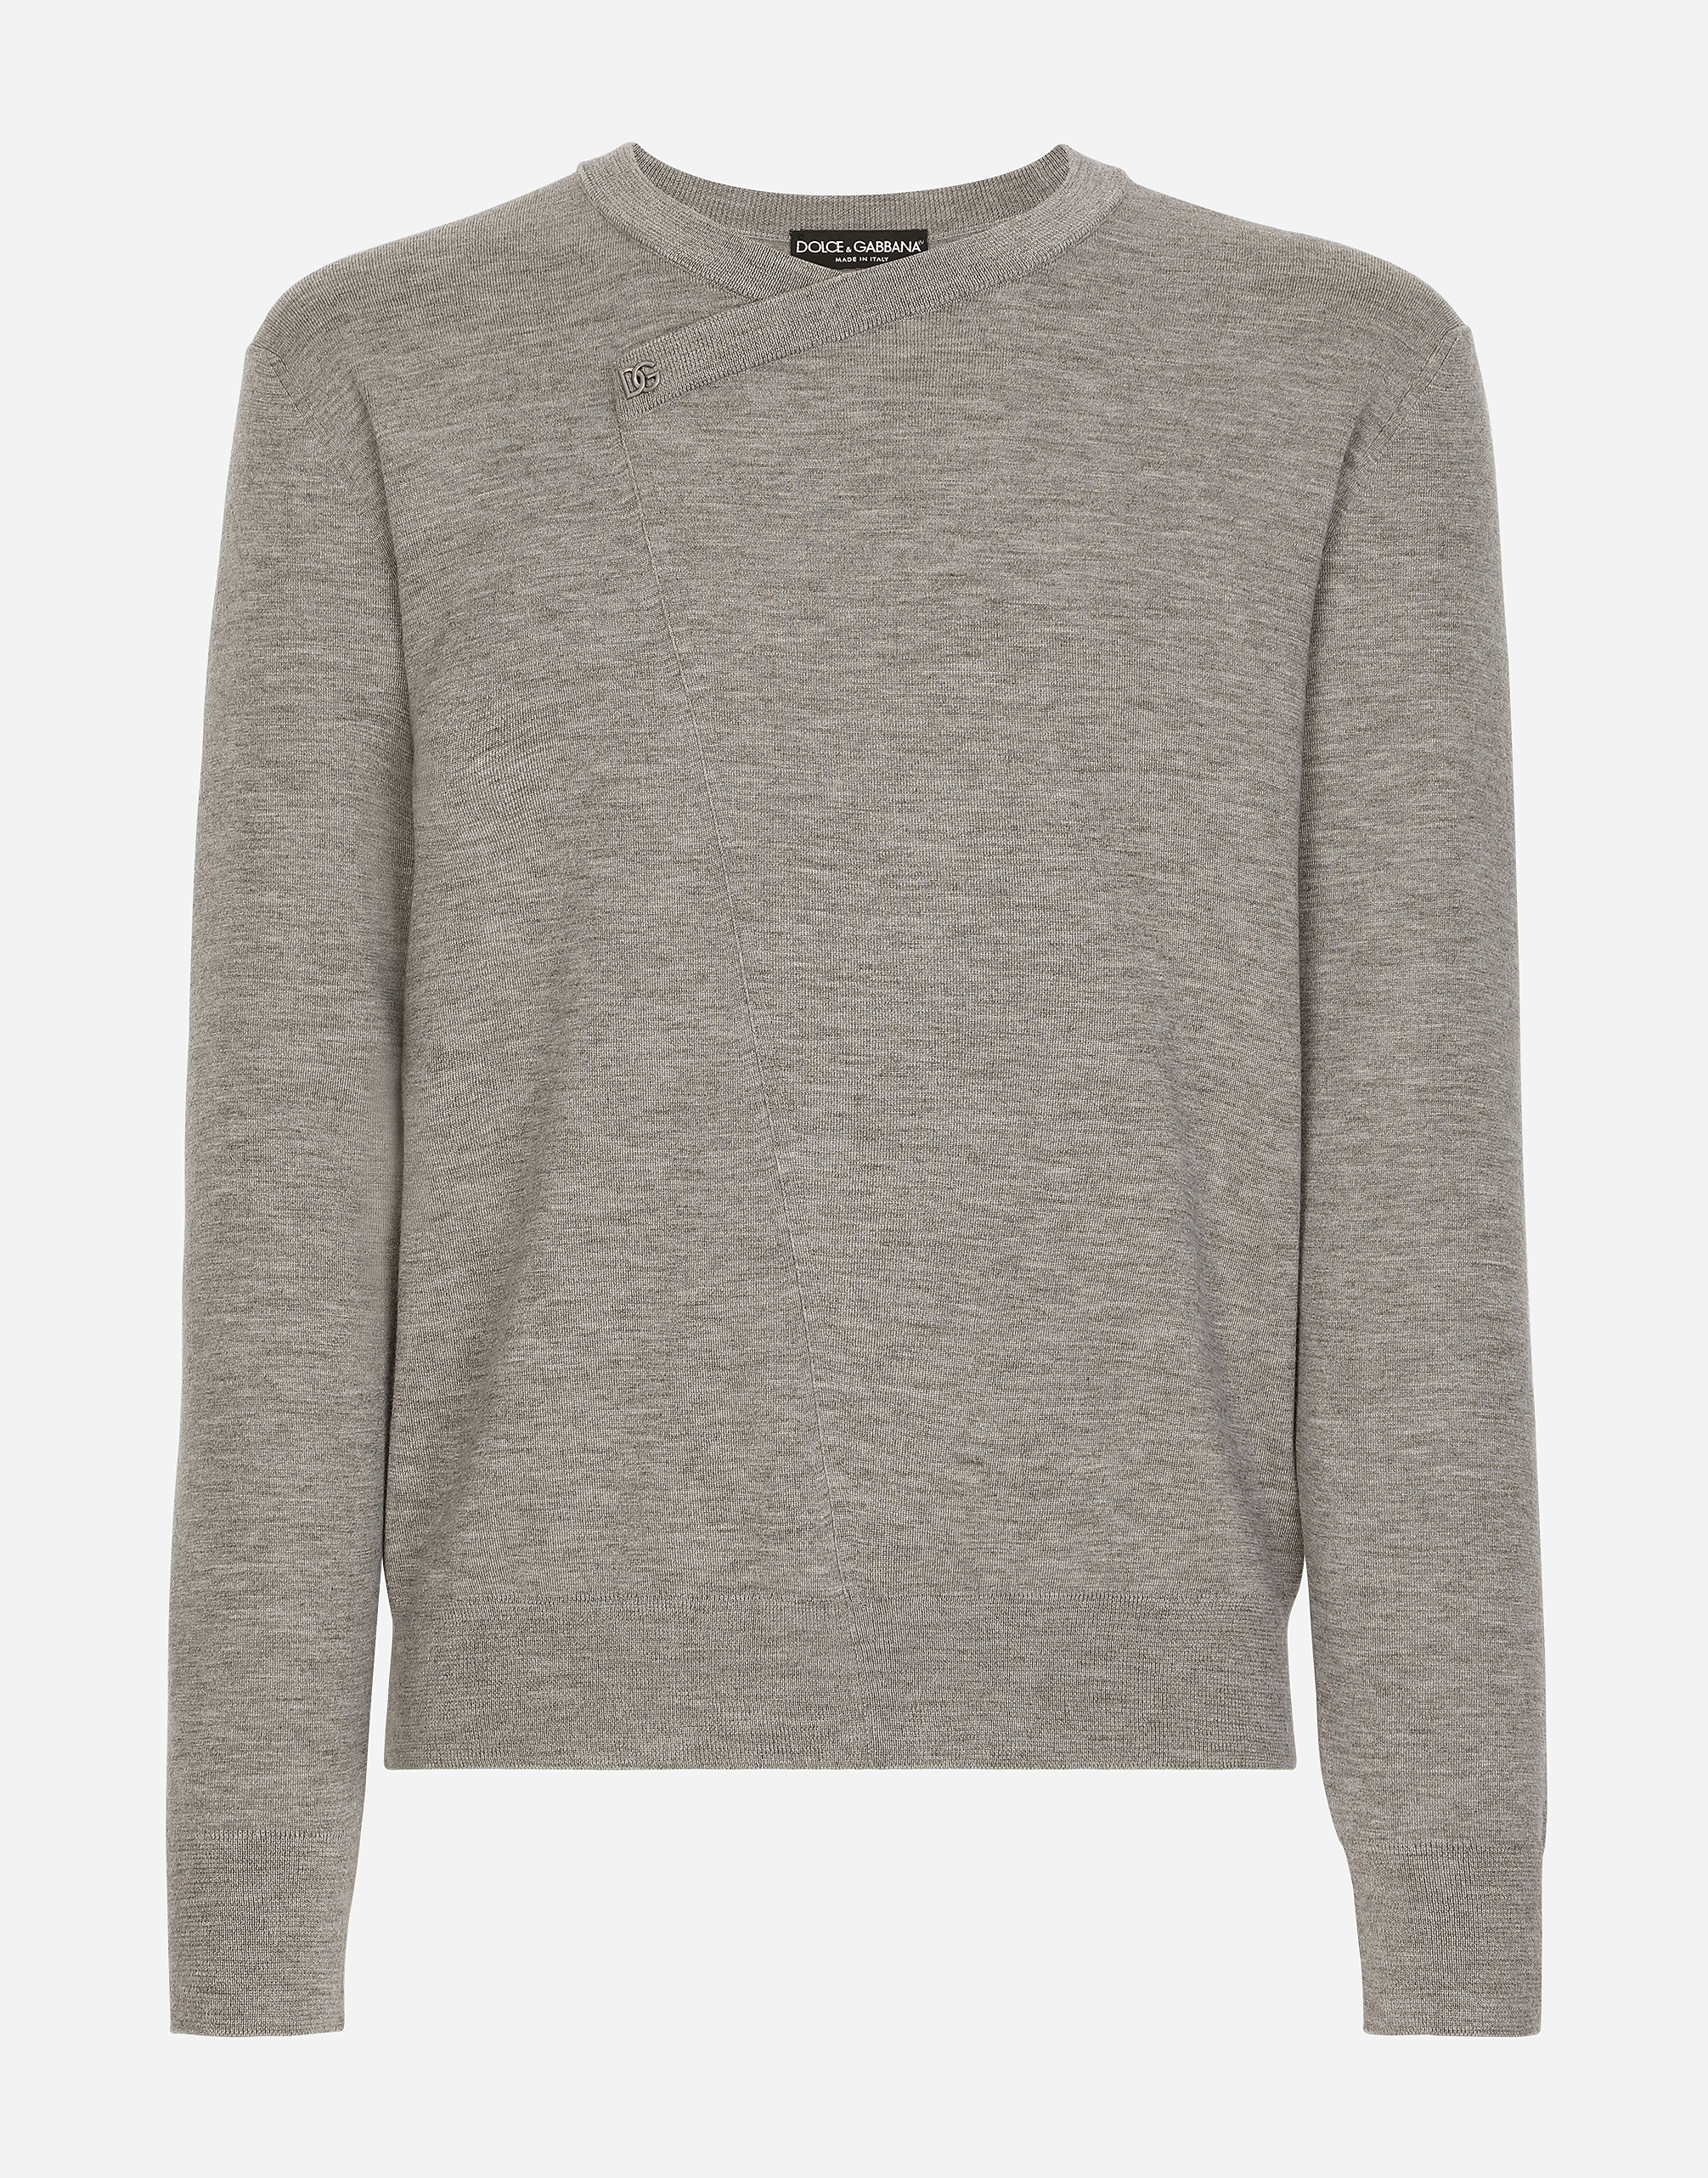 Wool round-neck sweater with DG hardware in Grey